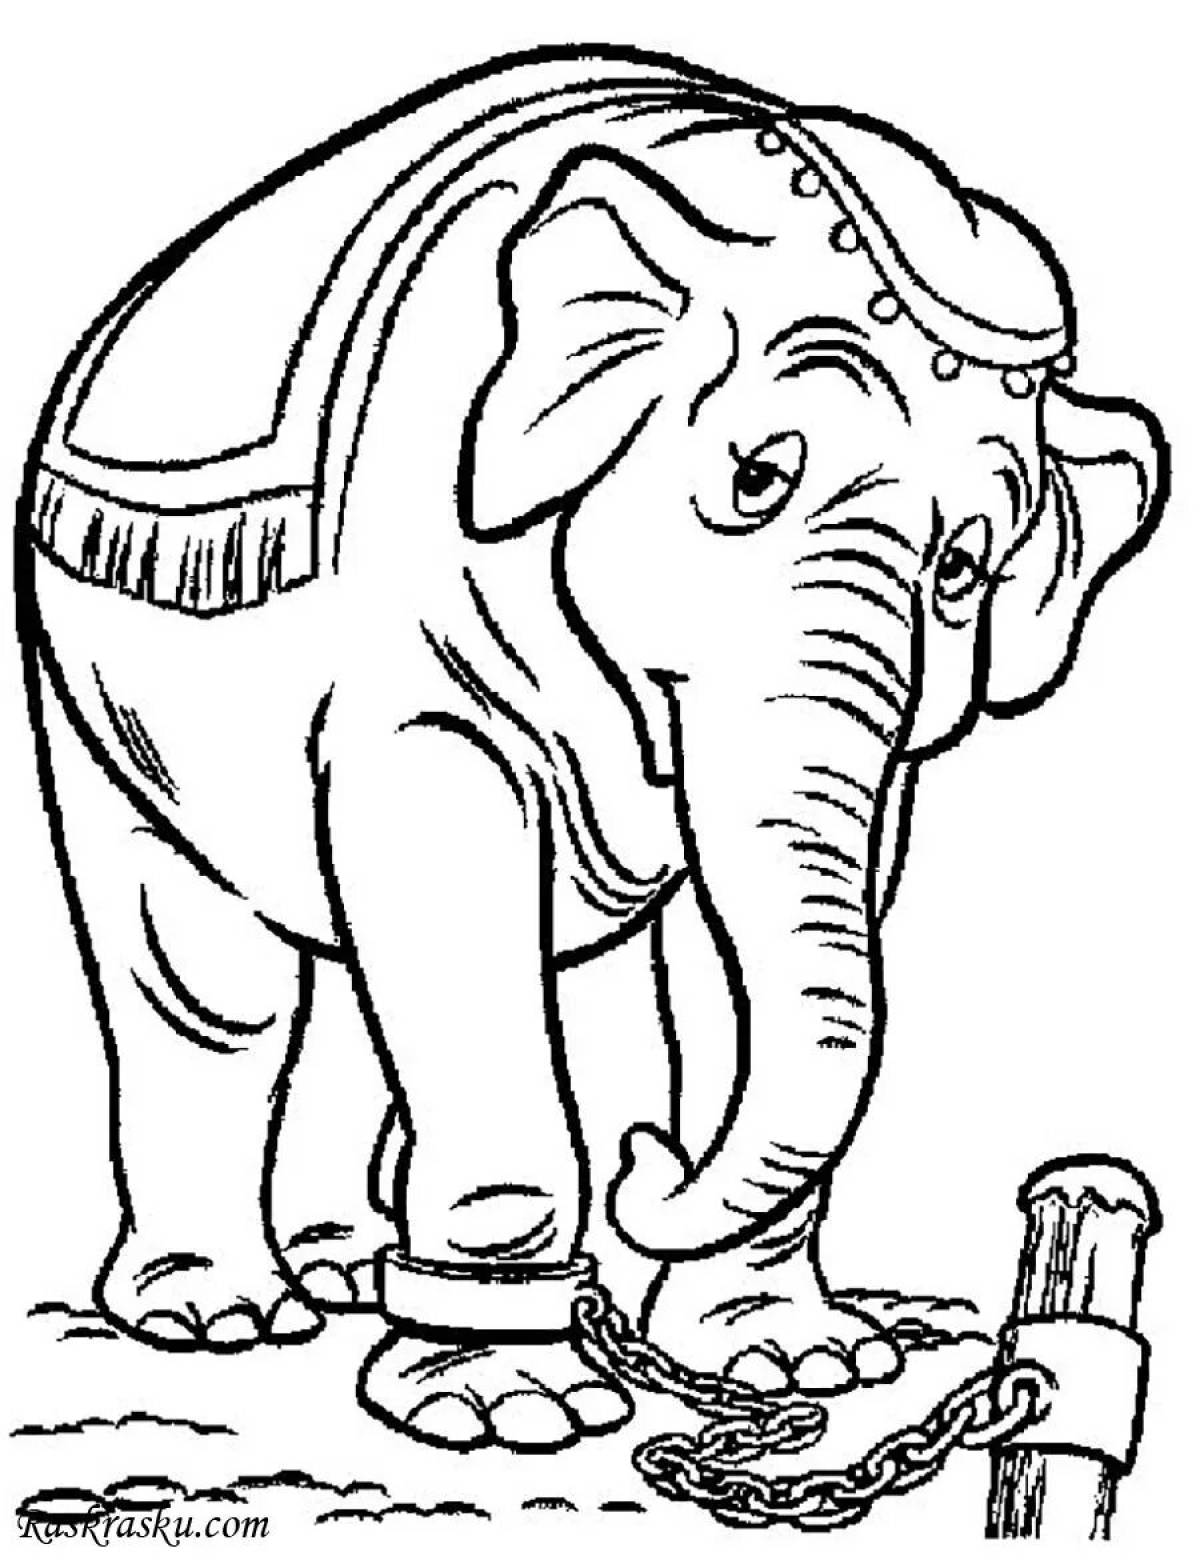 Zippy elephant coloring page